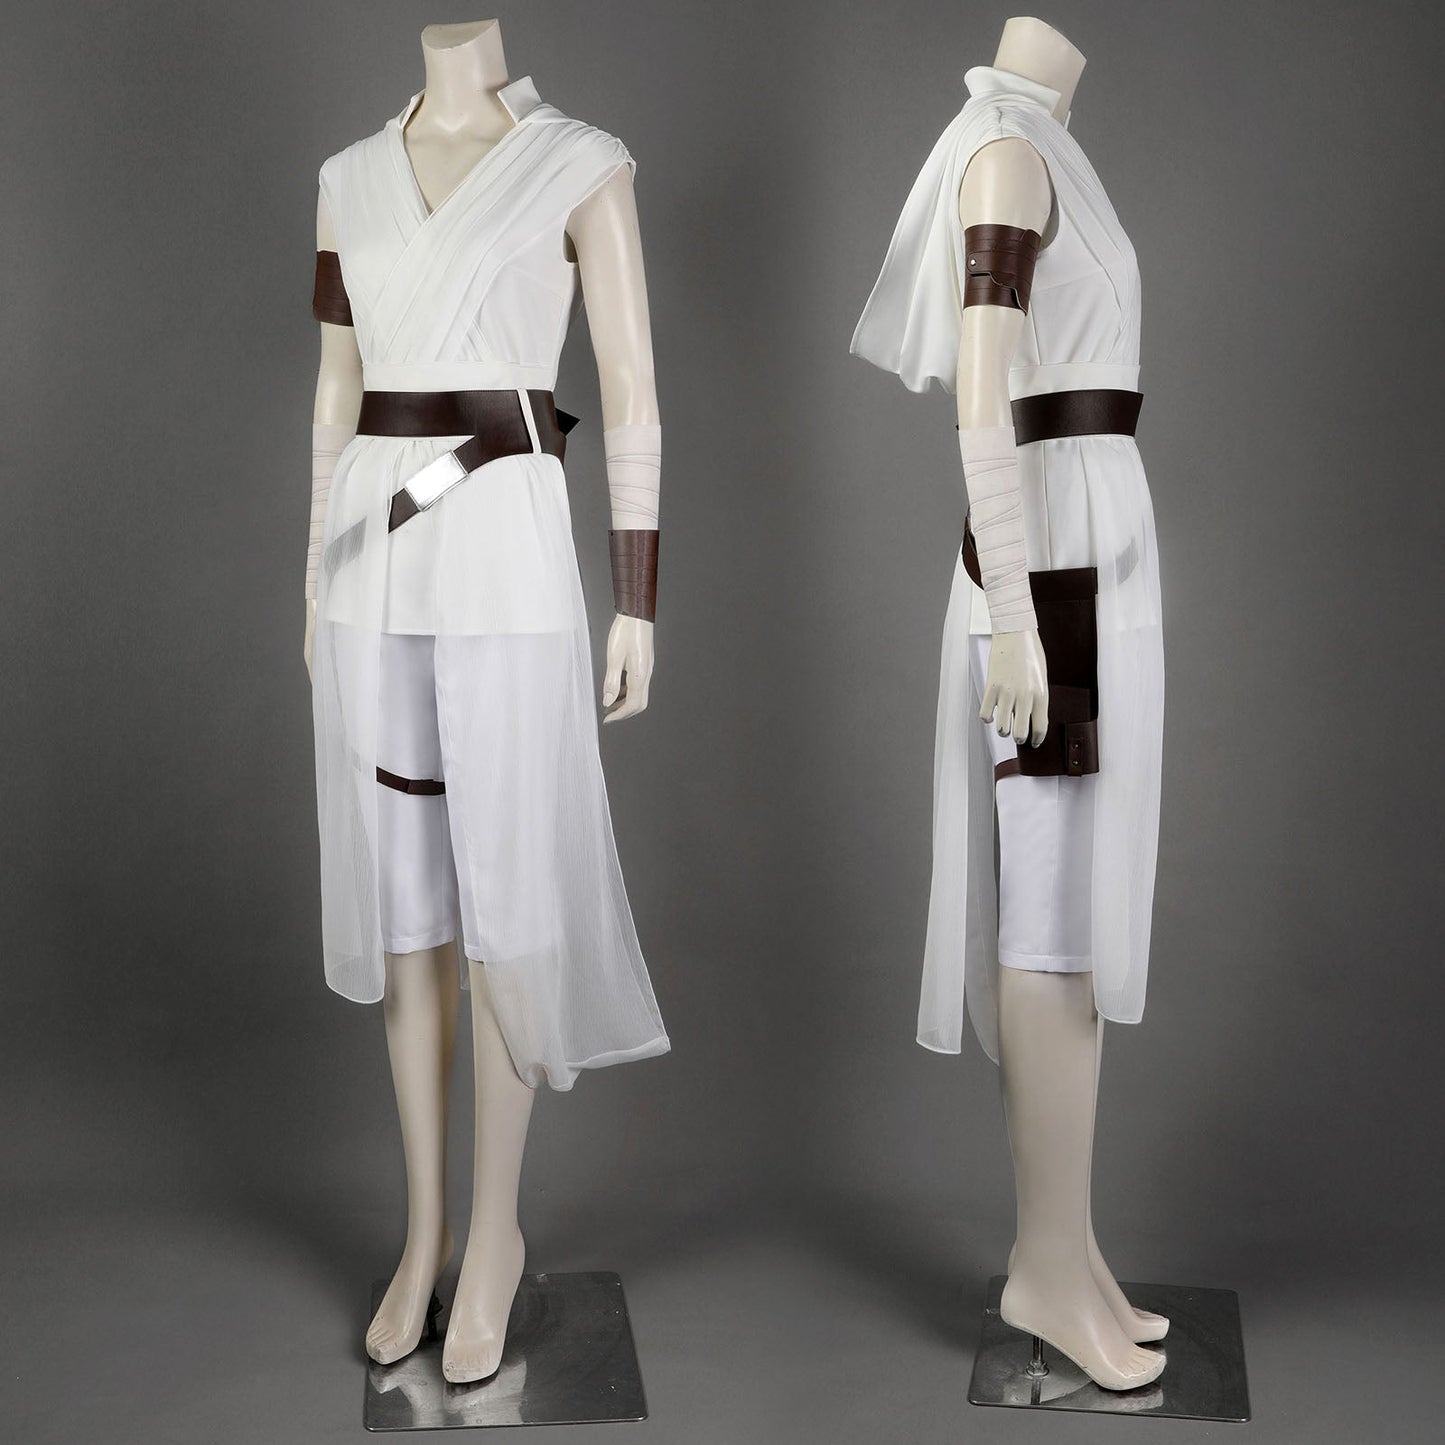 Star Wars 9 The Rise of Skywalker Rey Full Set Cosplay Costumes